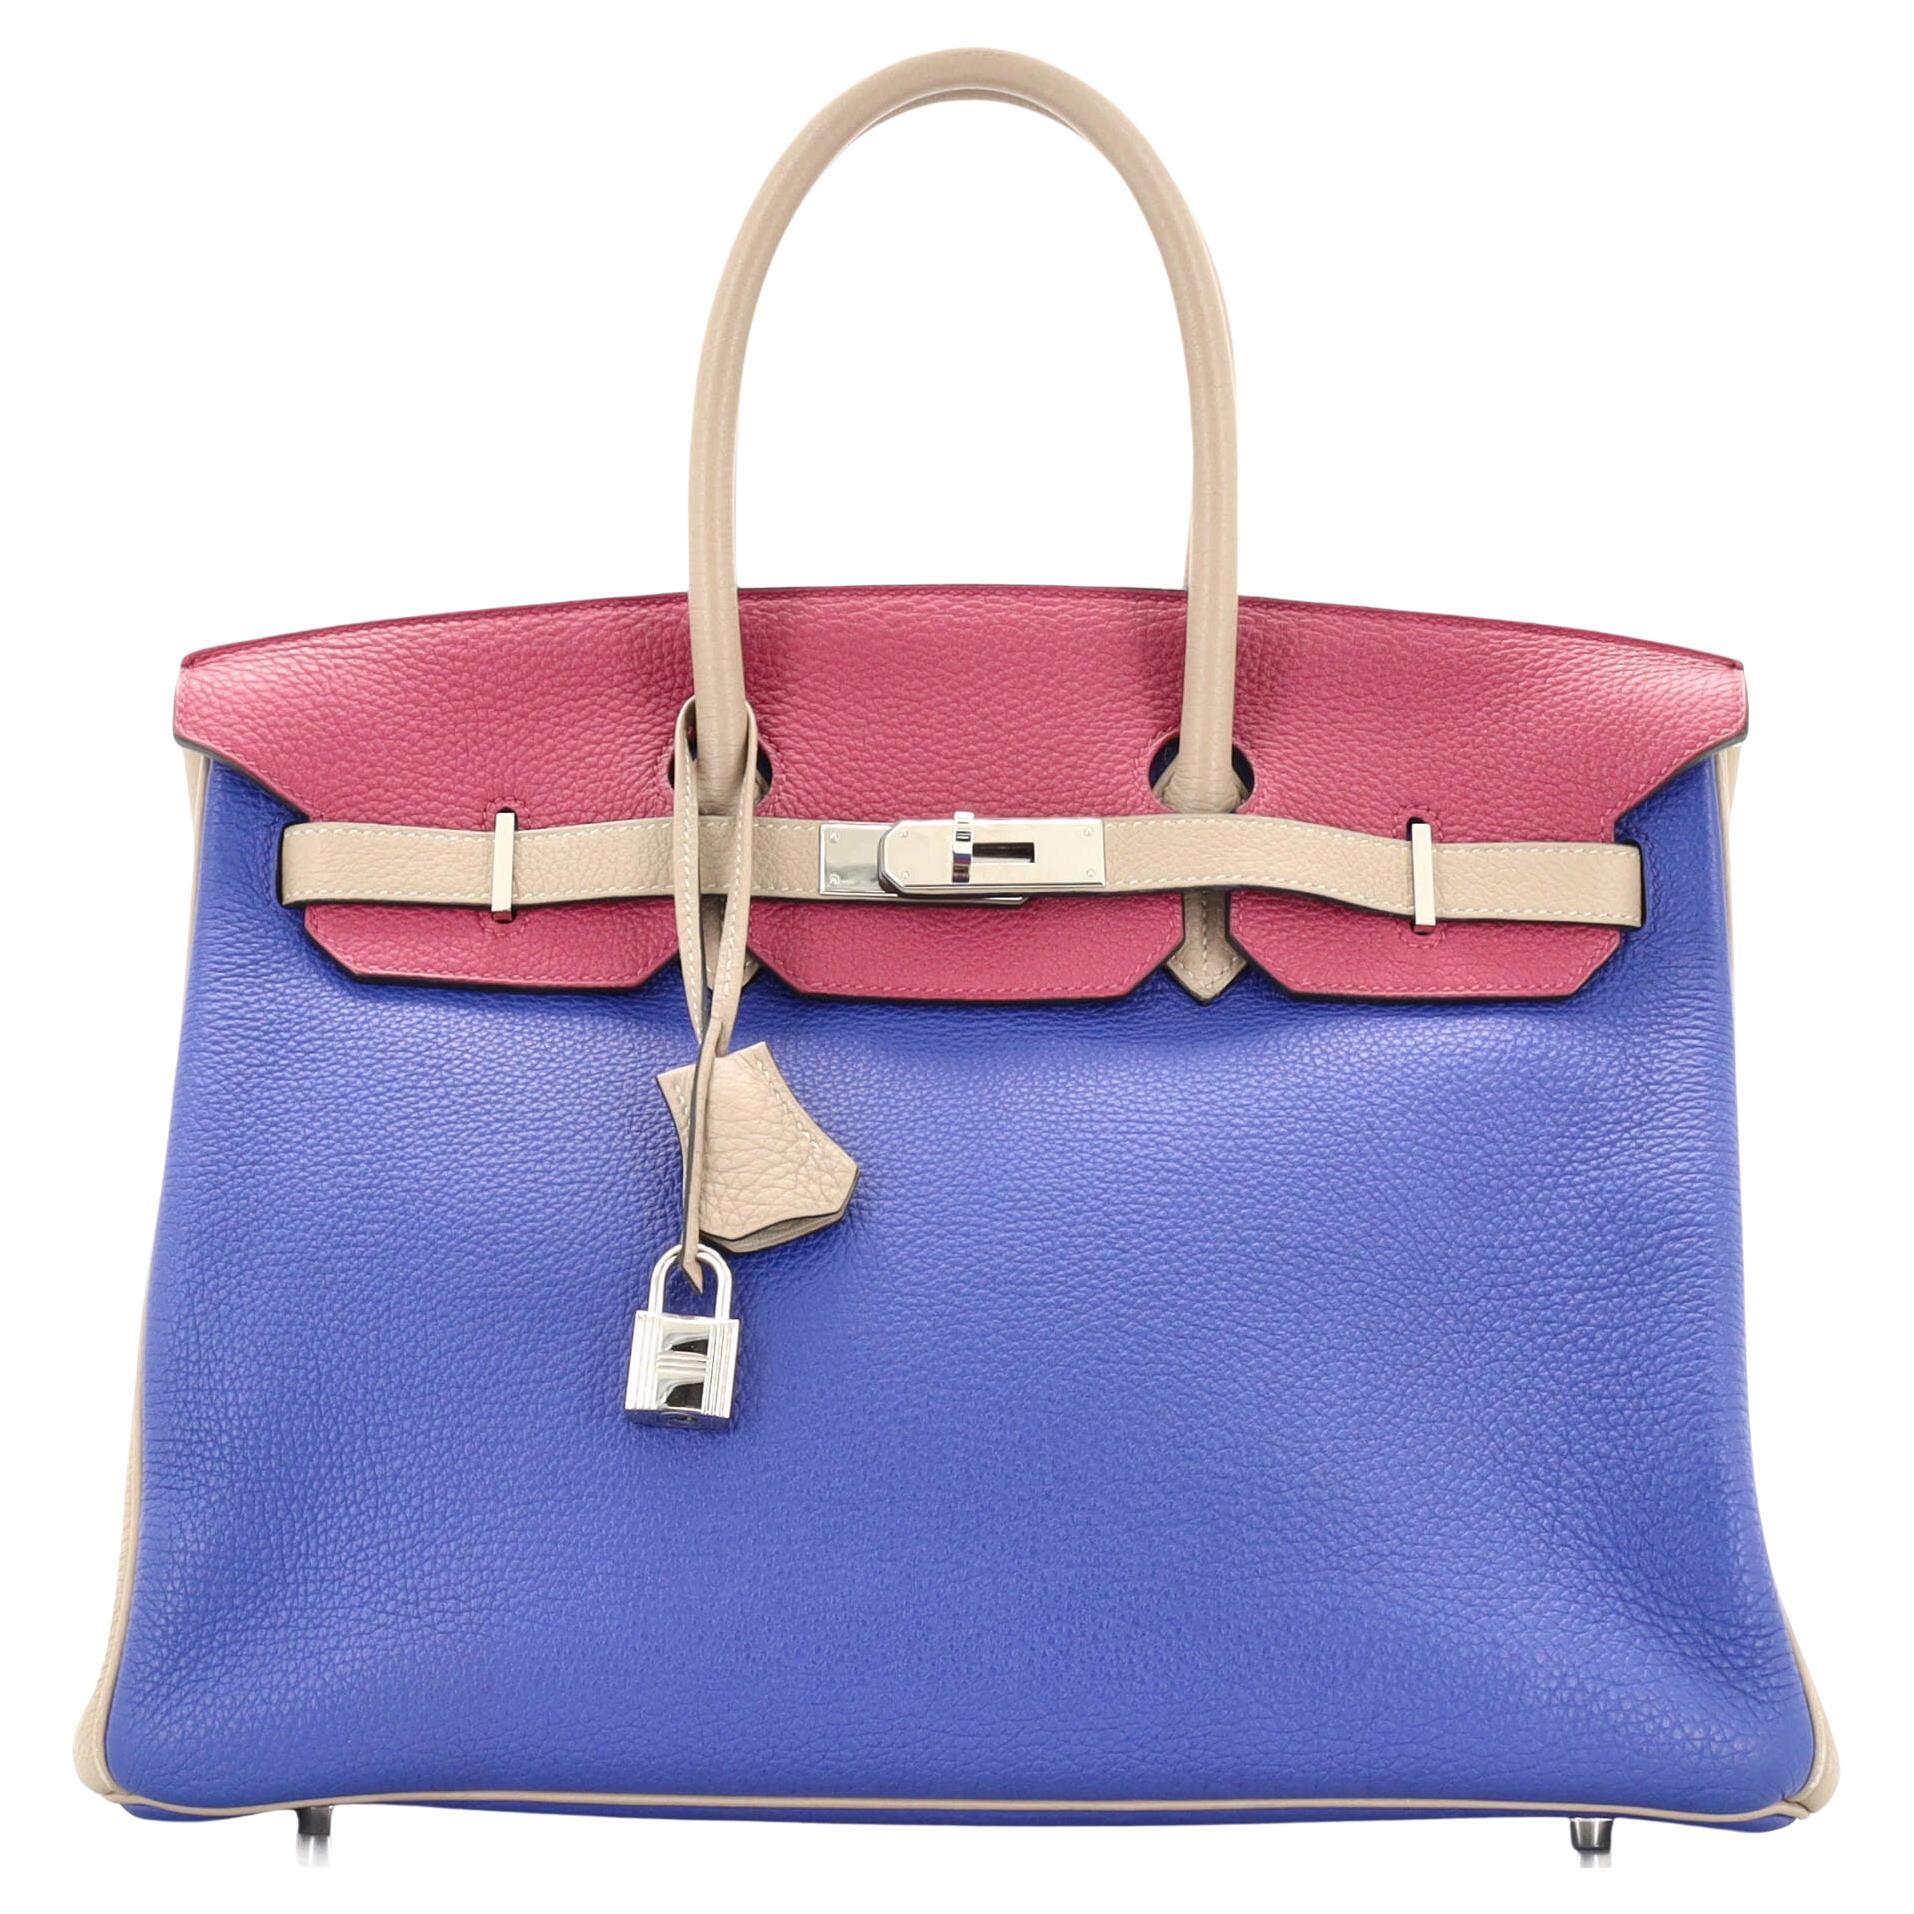 Hermes Birkin Handbag Tricolor Togo with Palladium Hardware 35